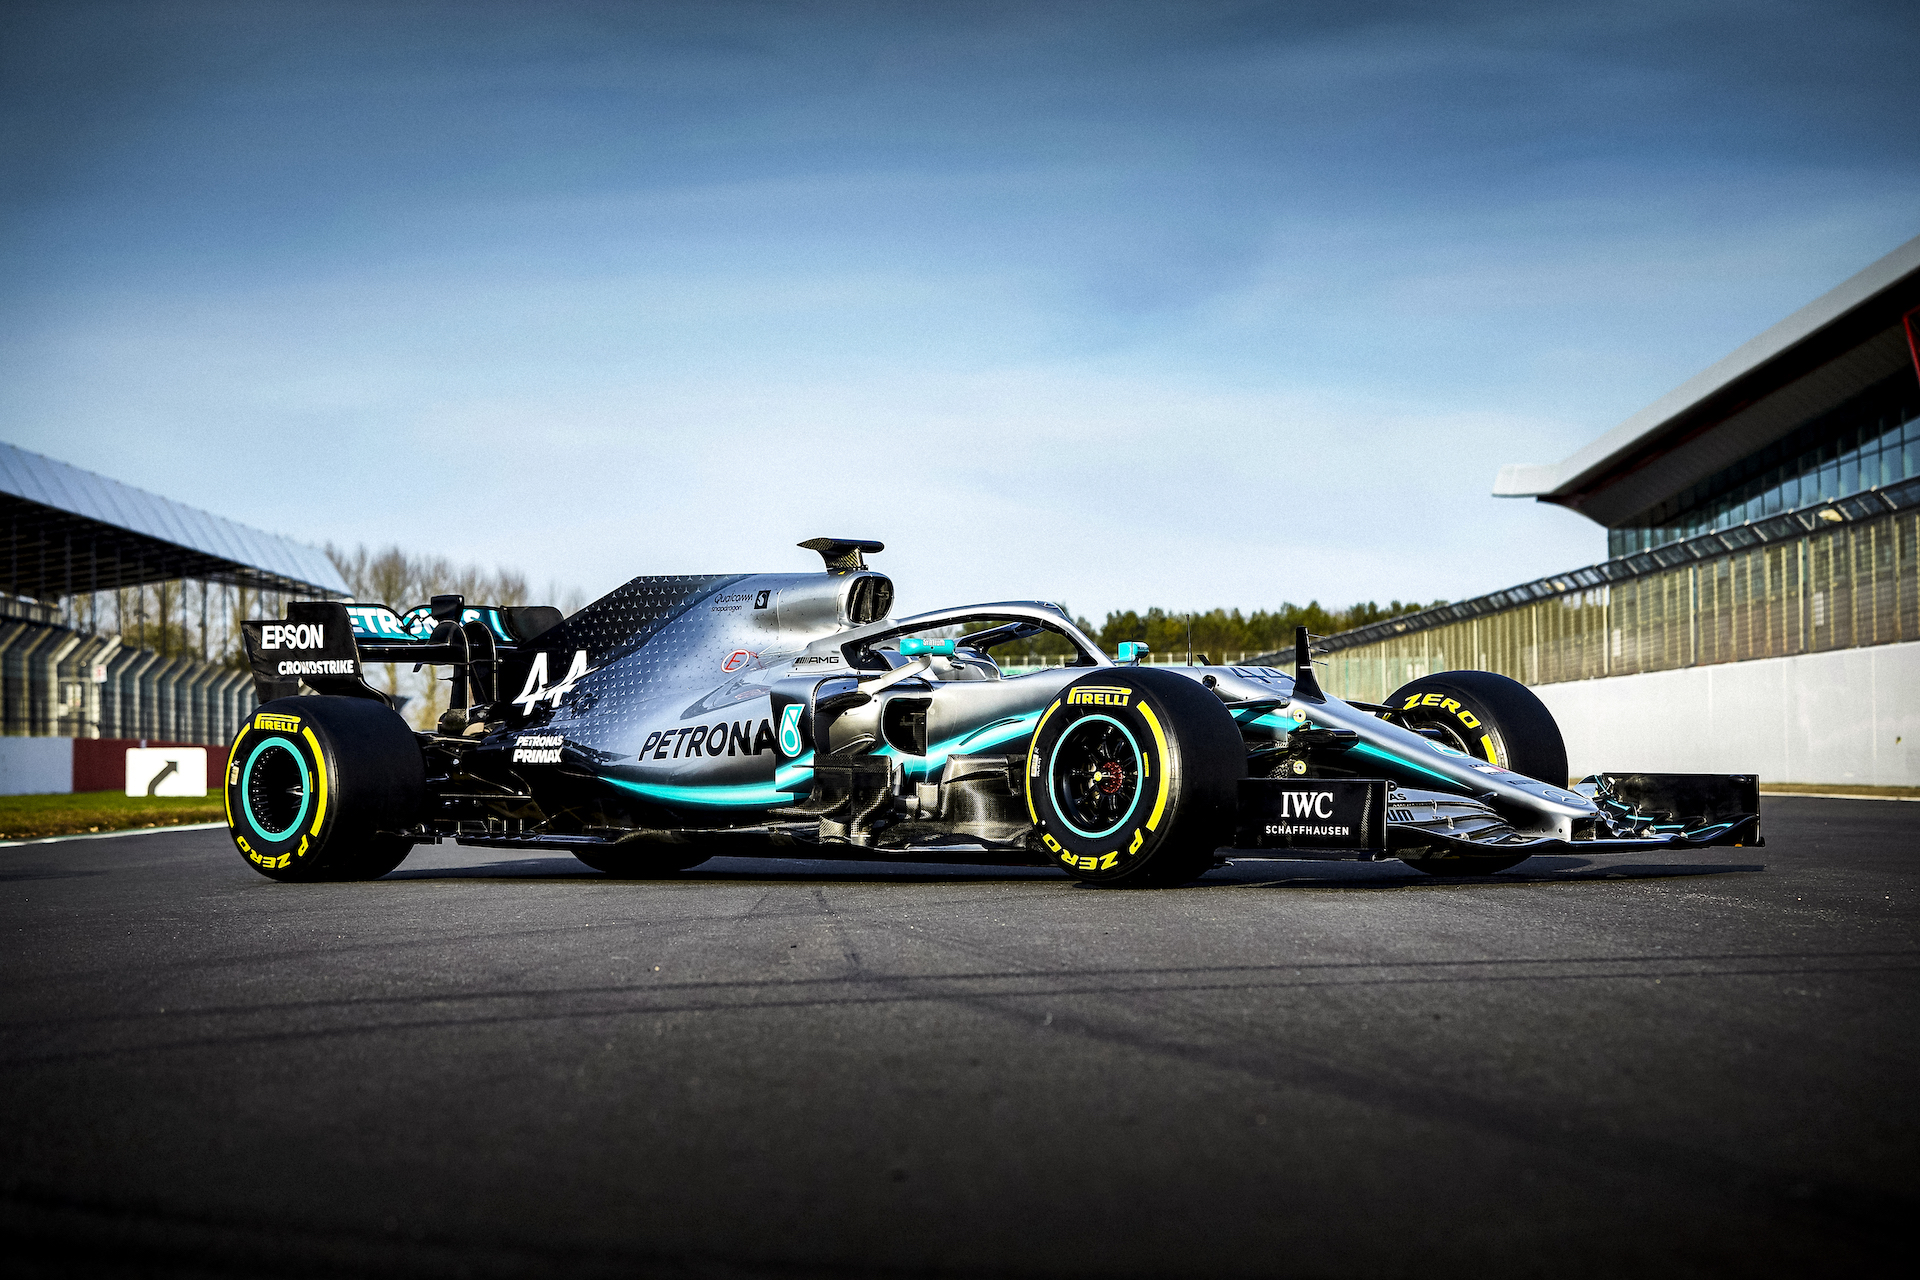 2019 Mercedes-AMG F1 car revealed, laps Silverstone